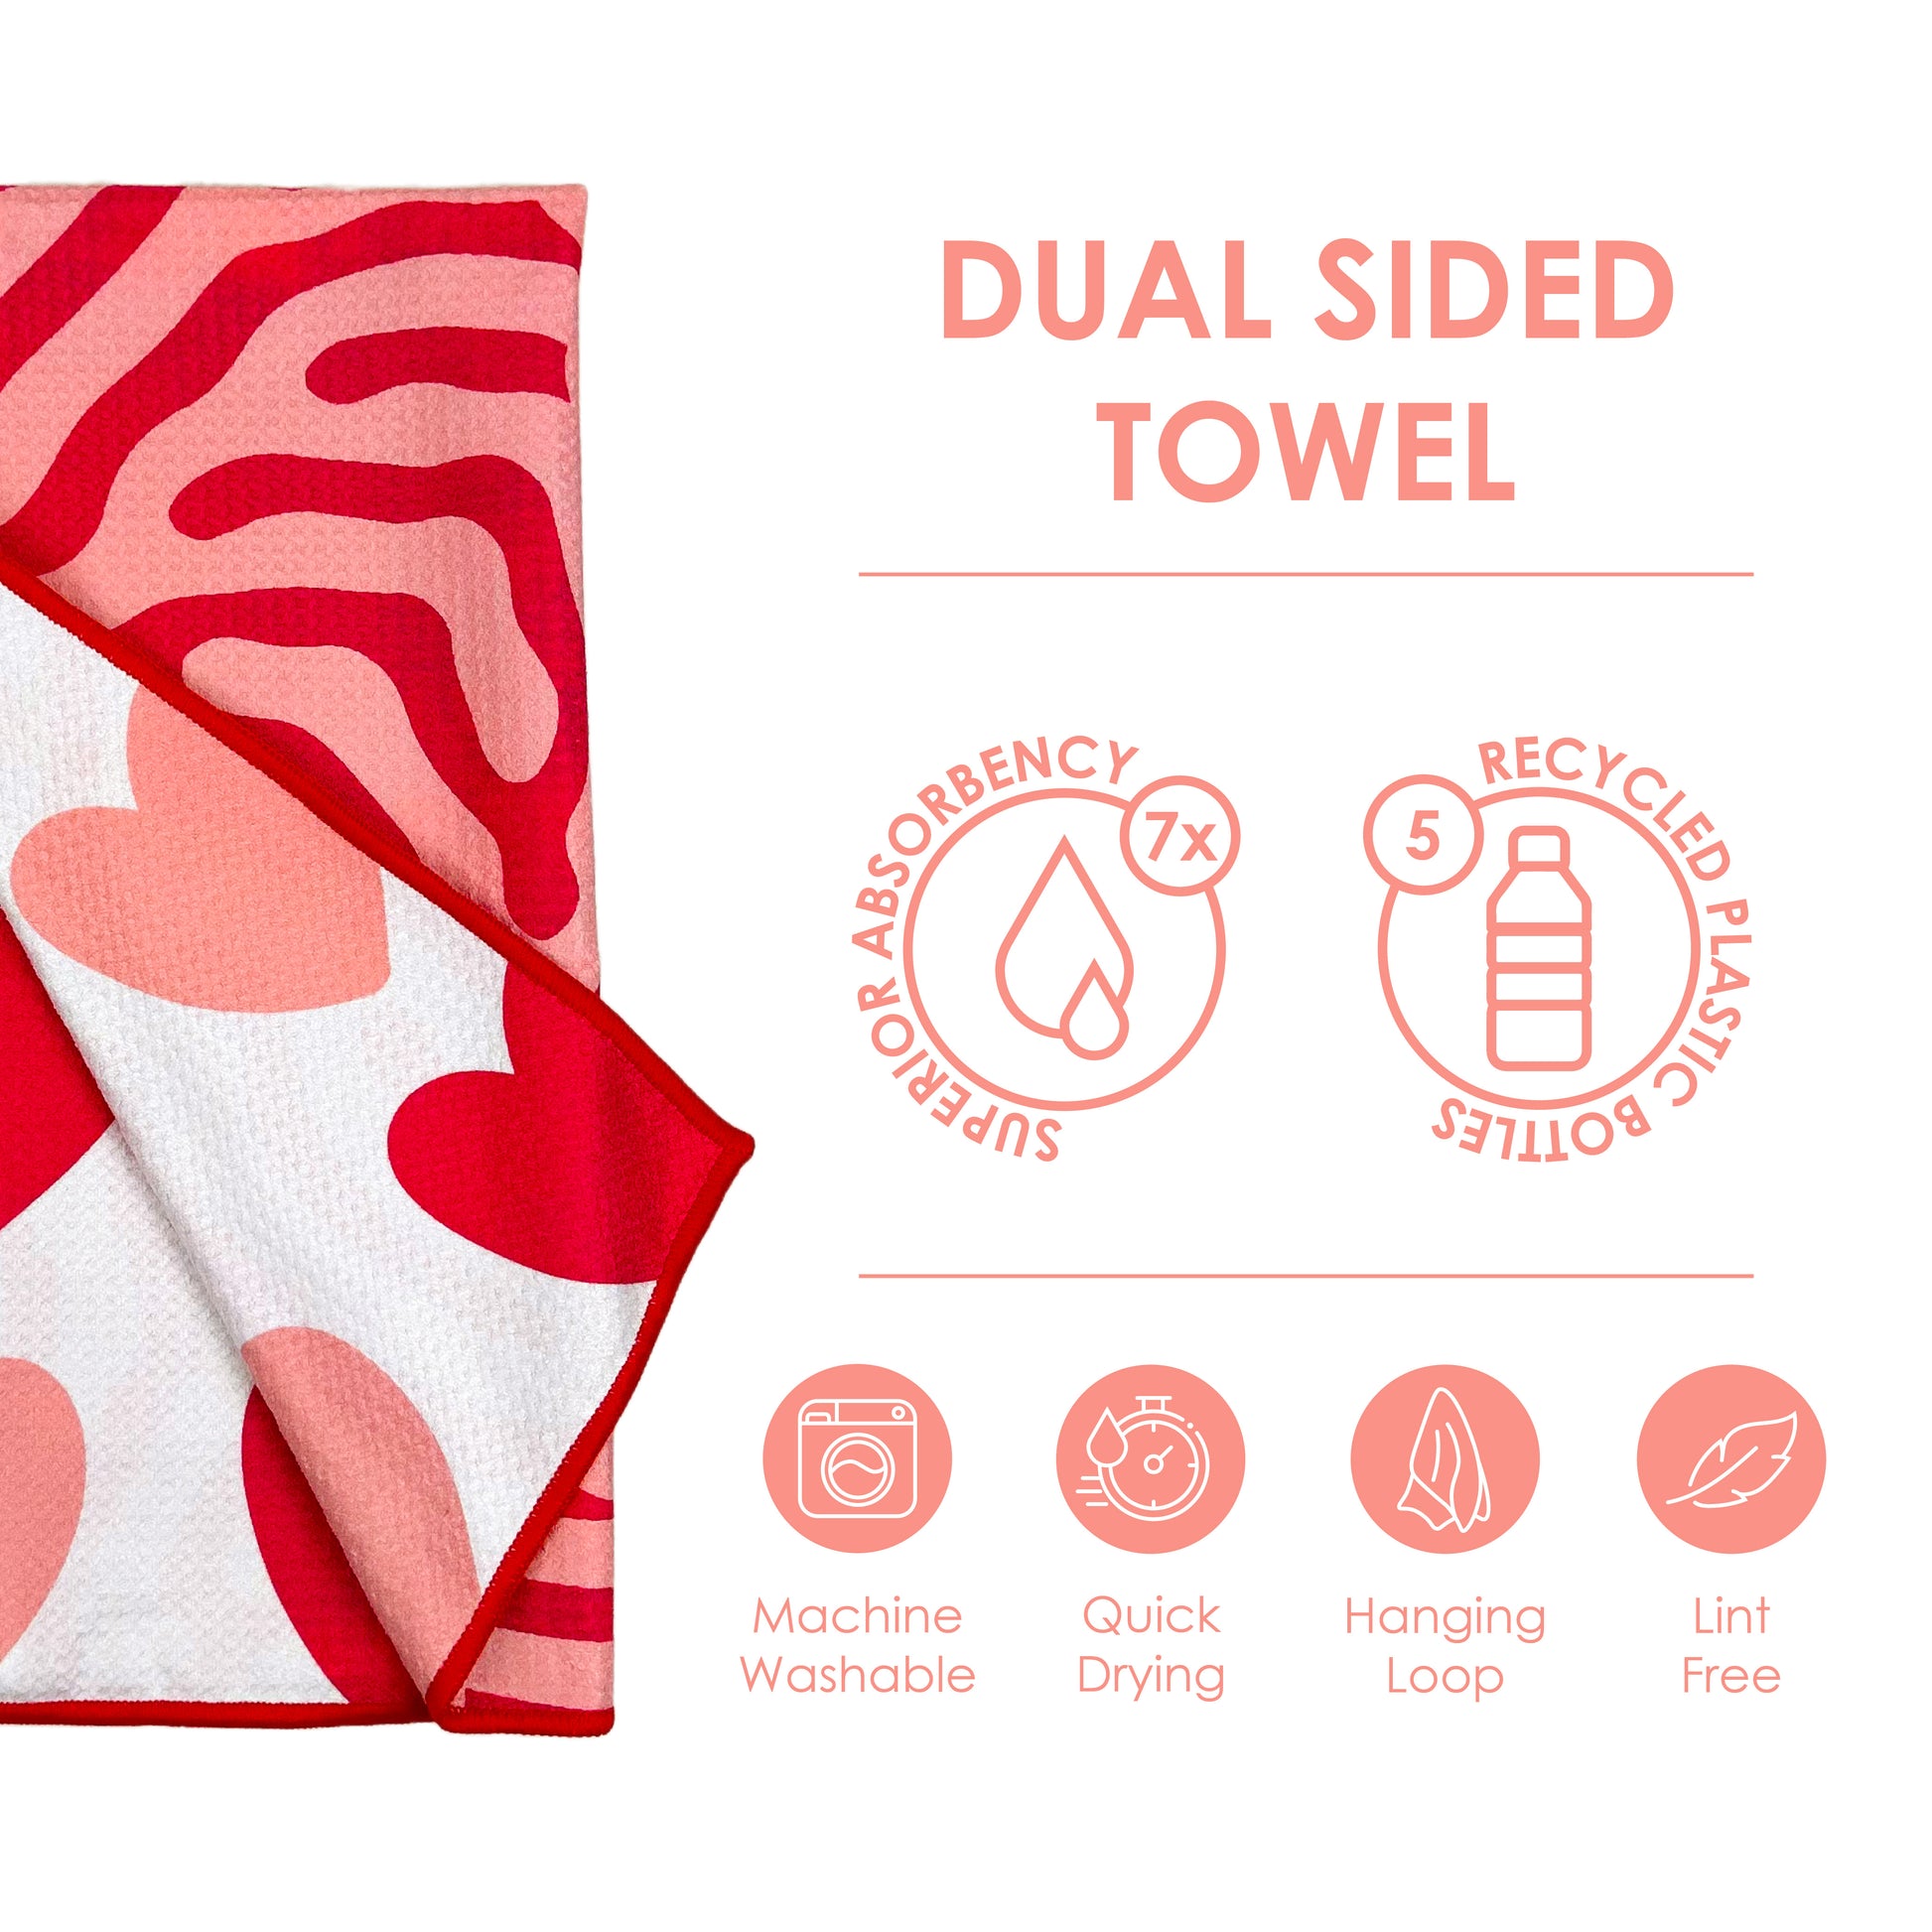 Black Petals - Kitchen Dish Towel & Hand towel – Buzzee